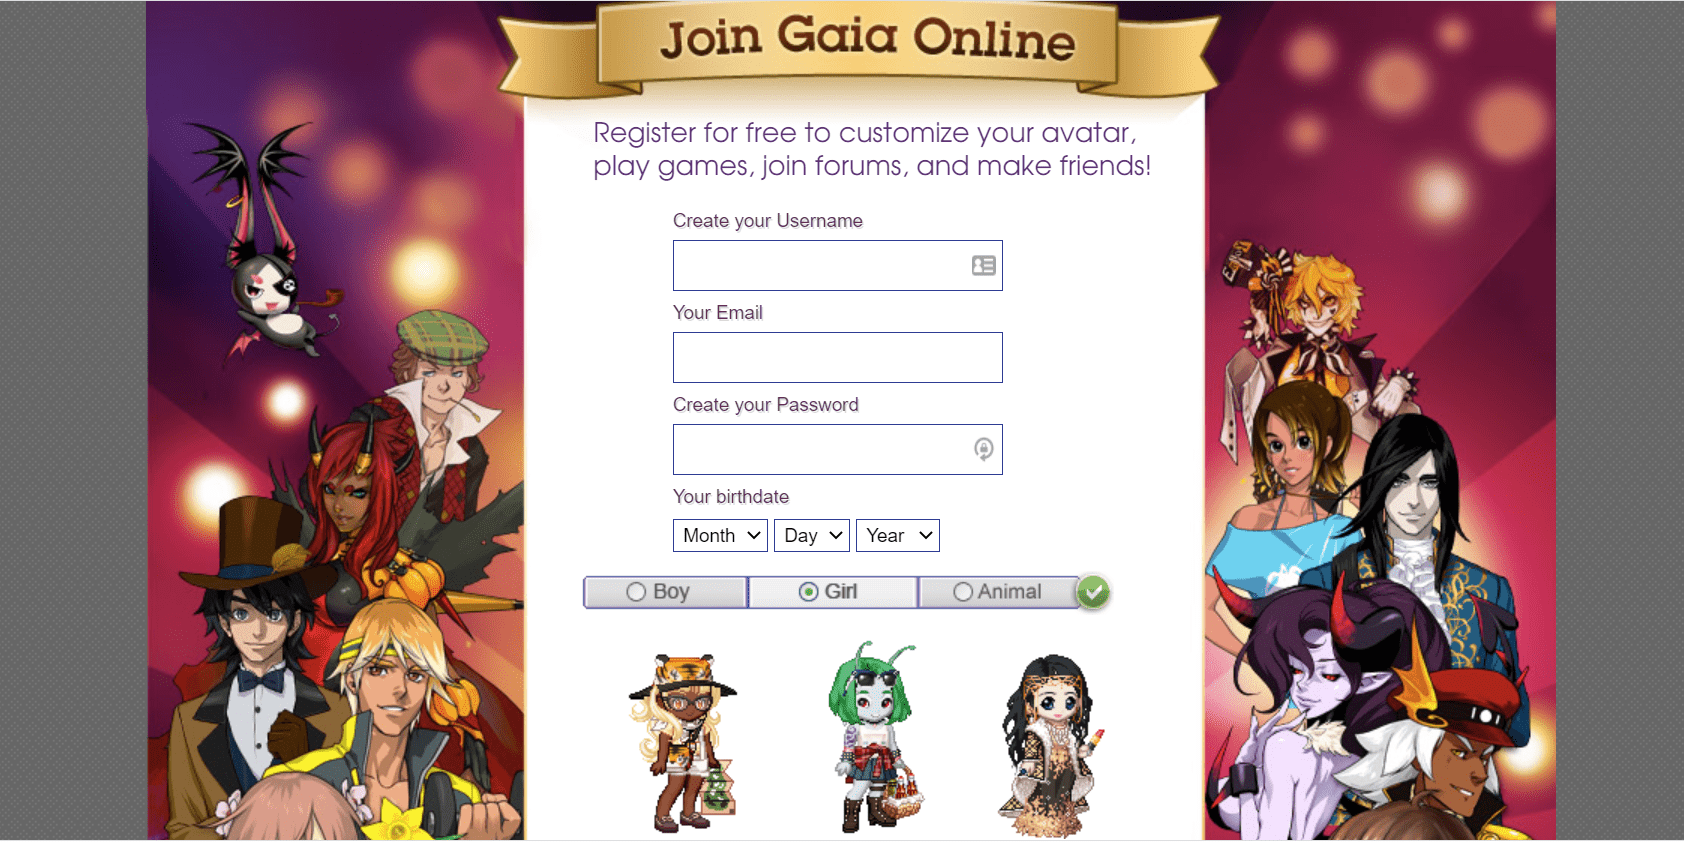 Games like Gaia Online